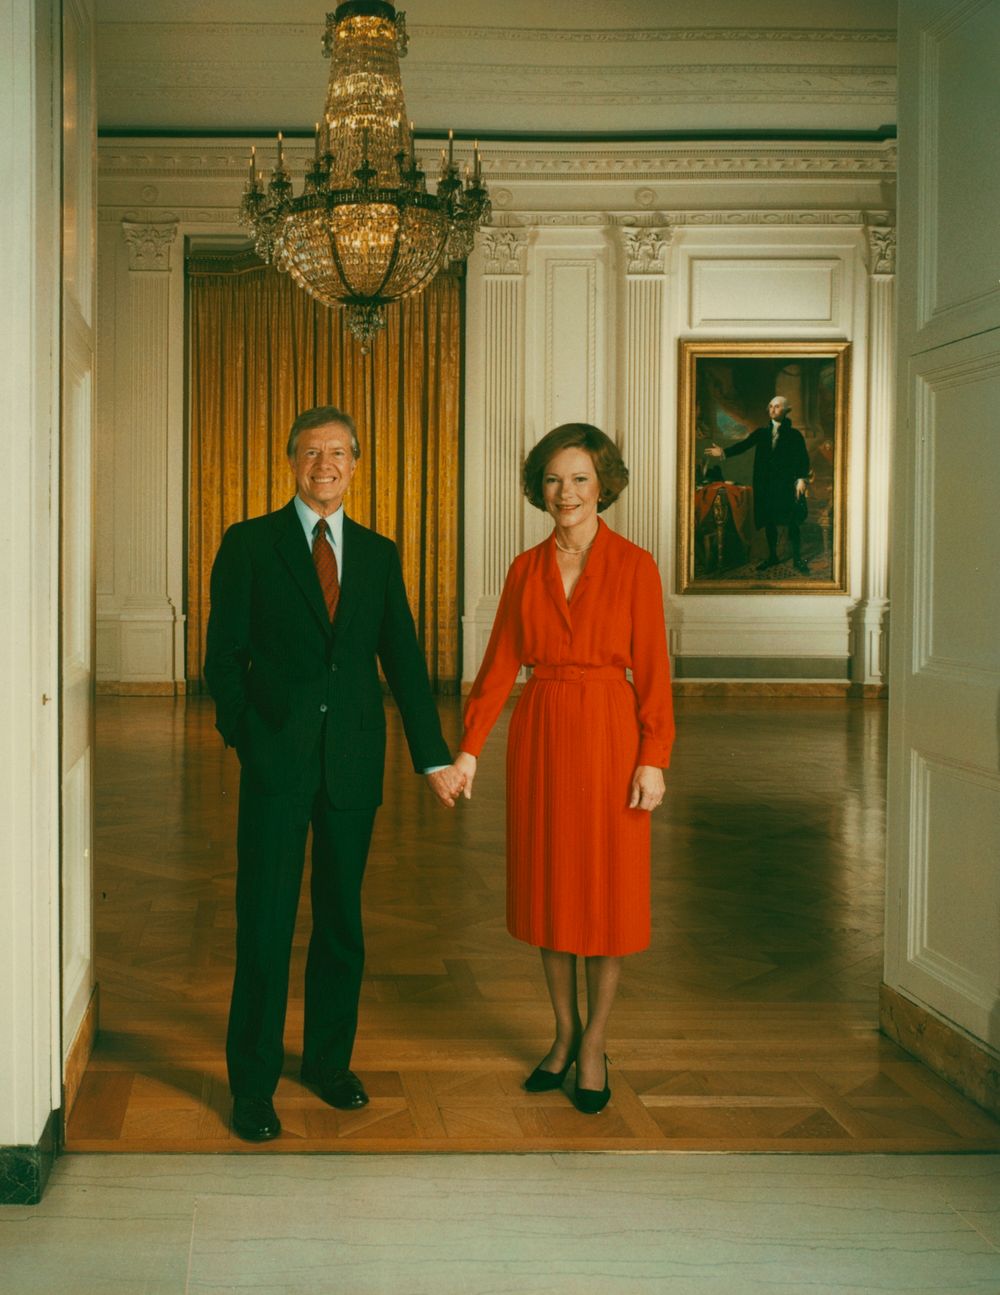 Rosalynn and Jimmy Carter